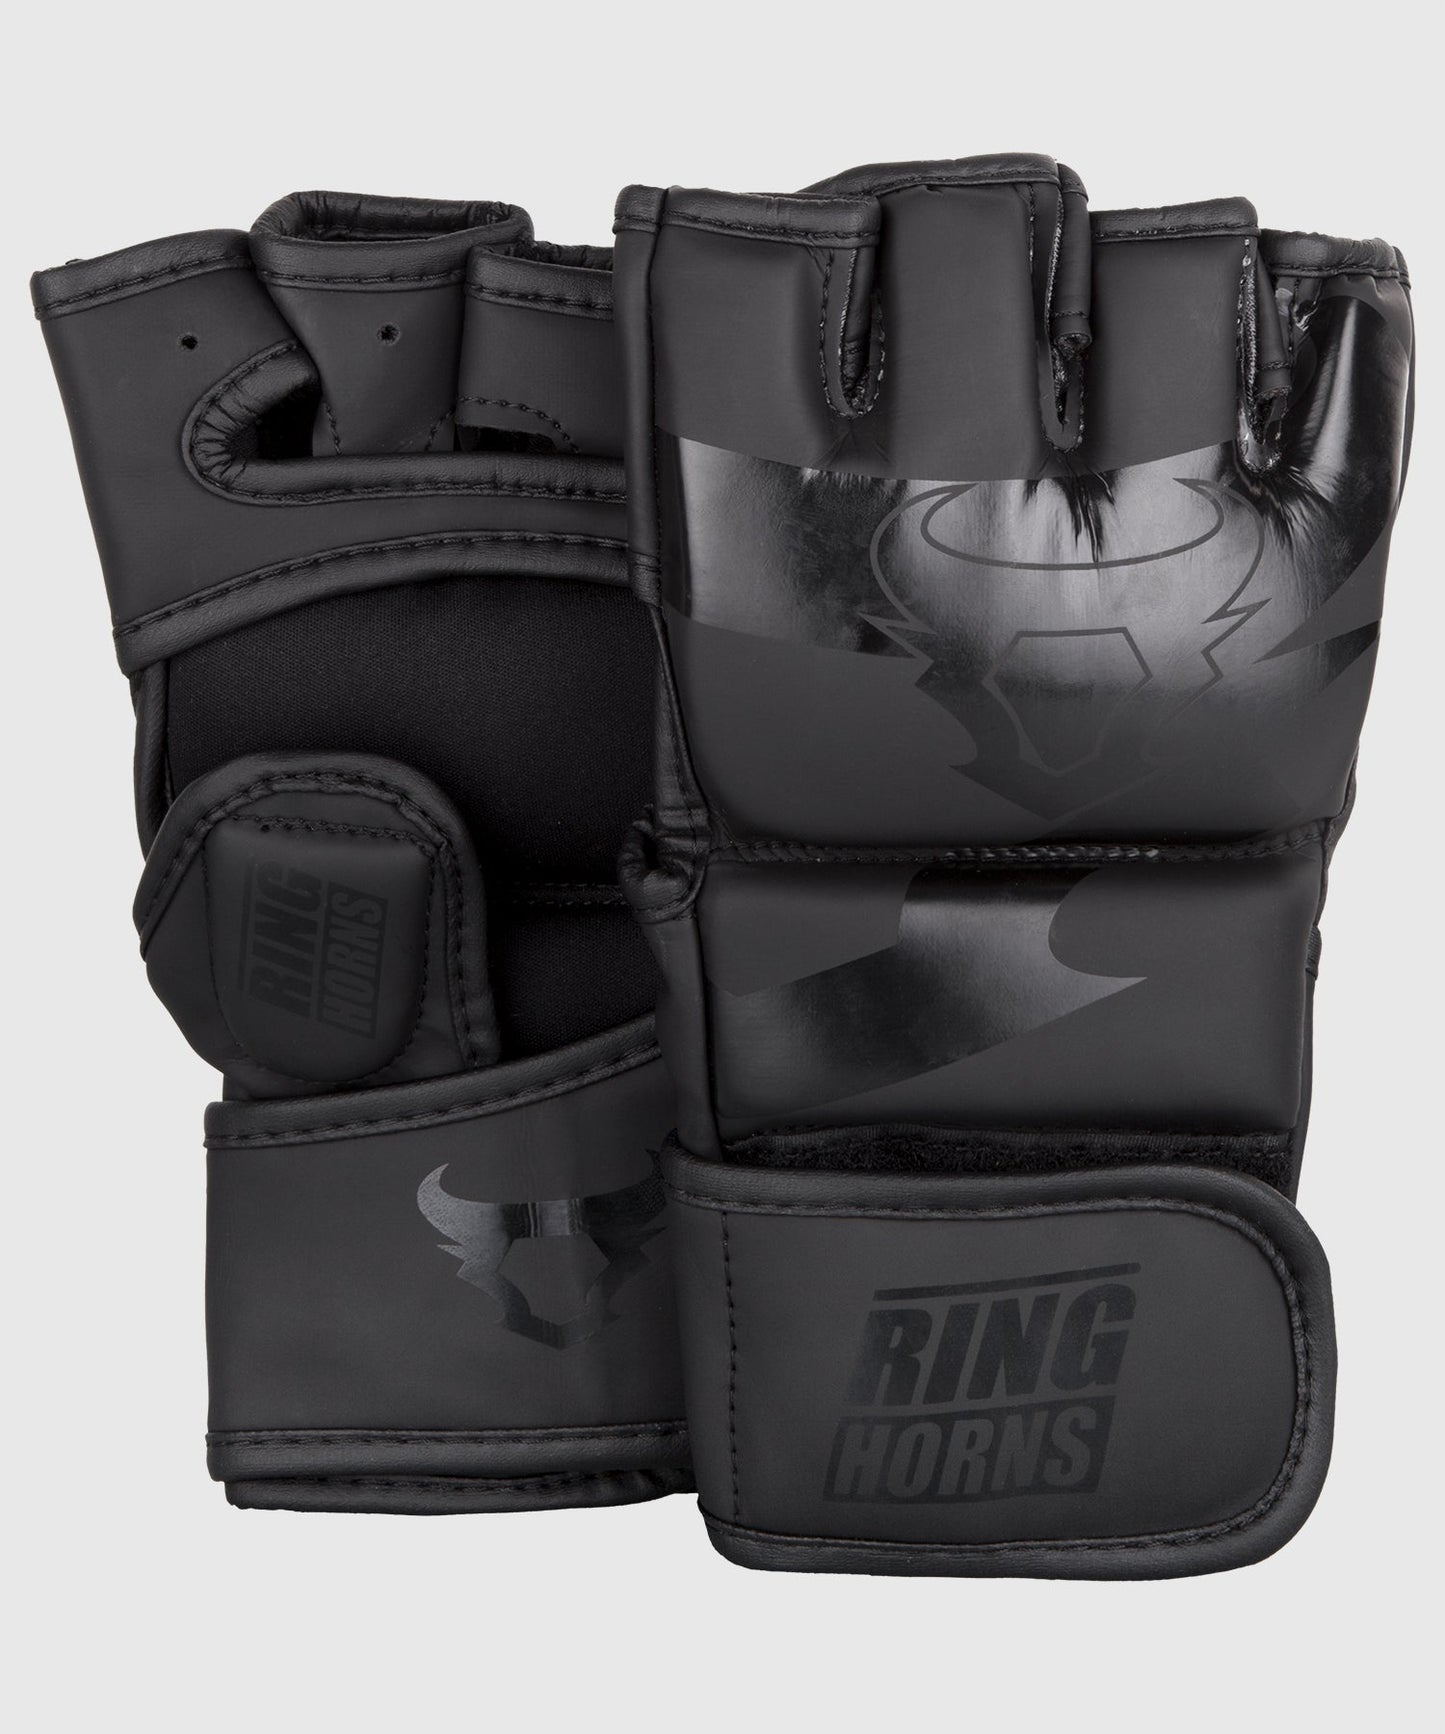 Ringhorns Charger MMA Handschuhe